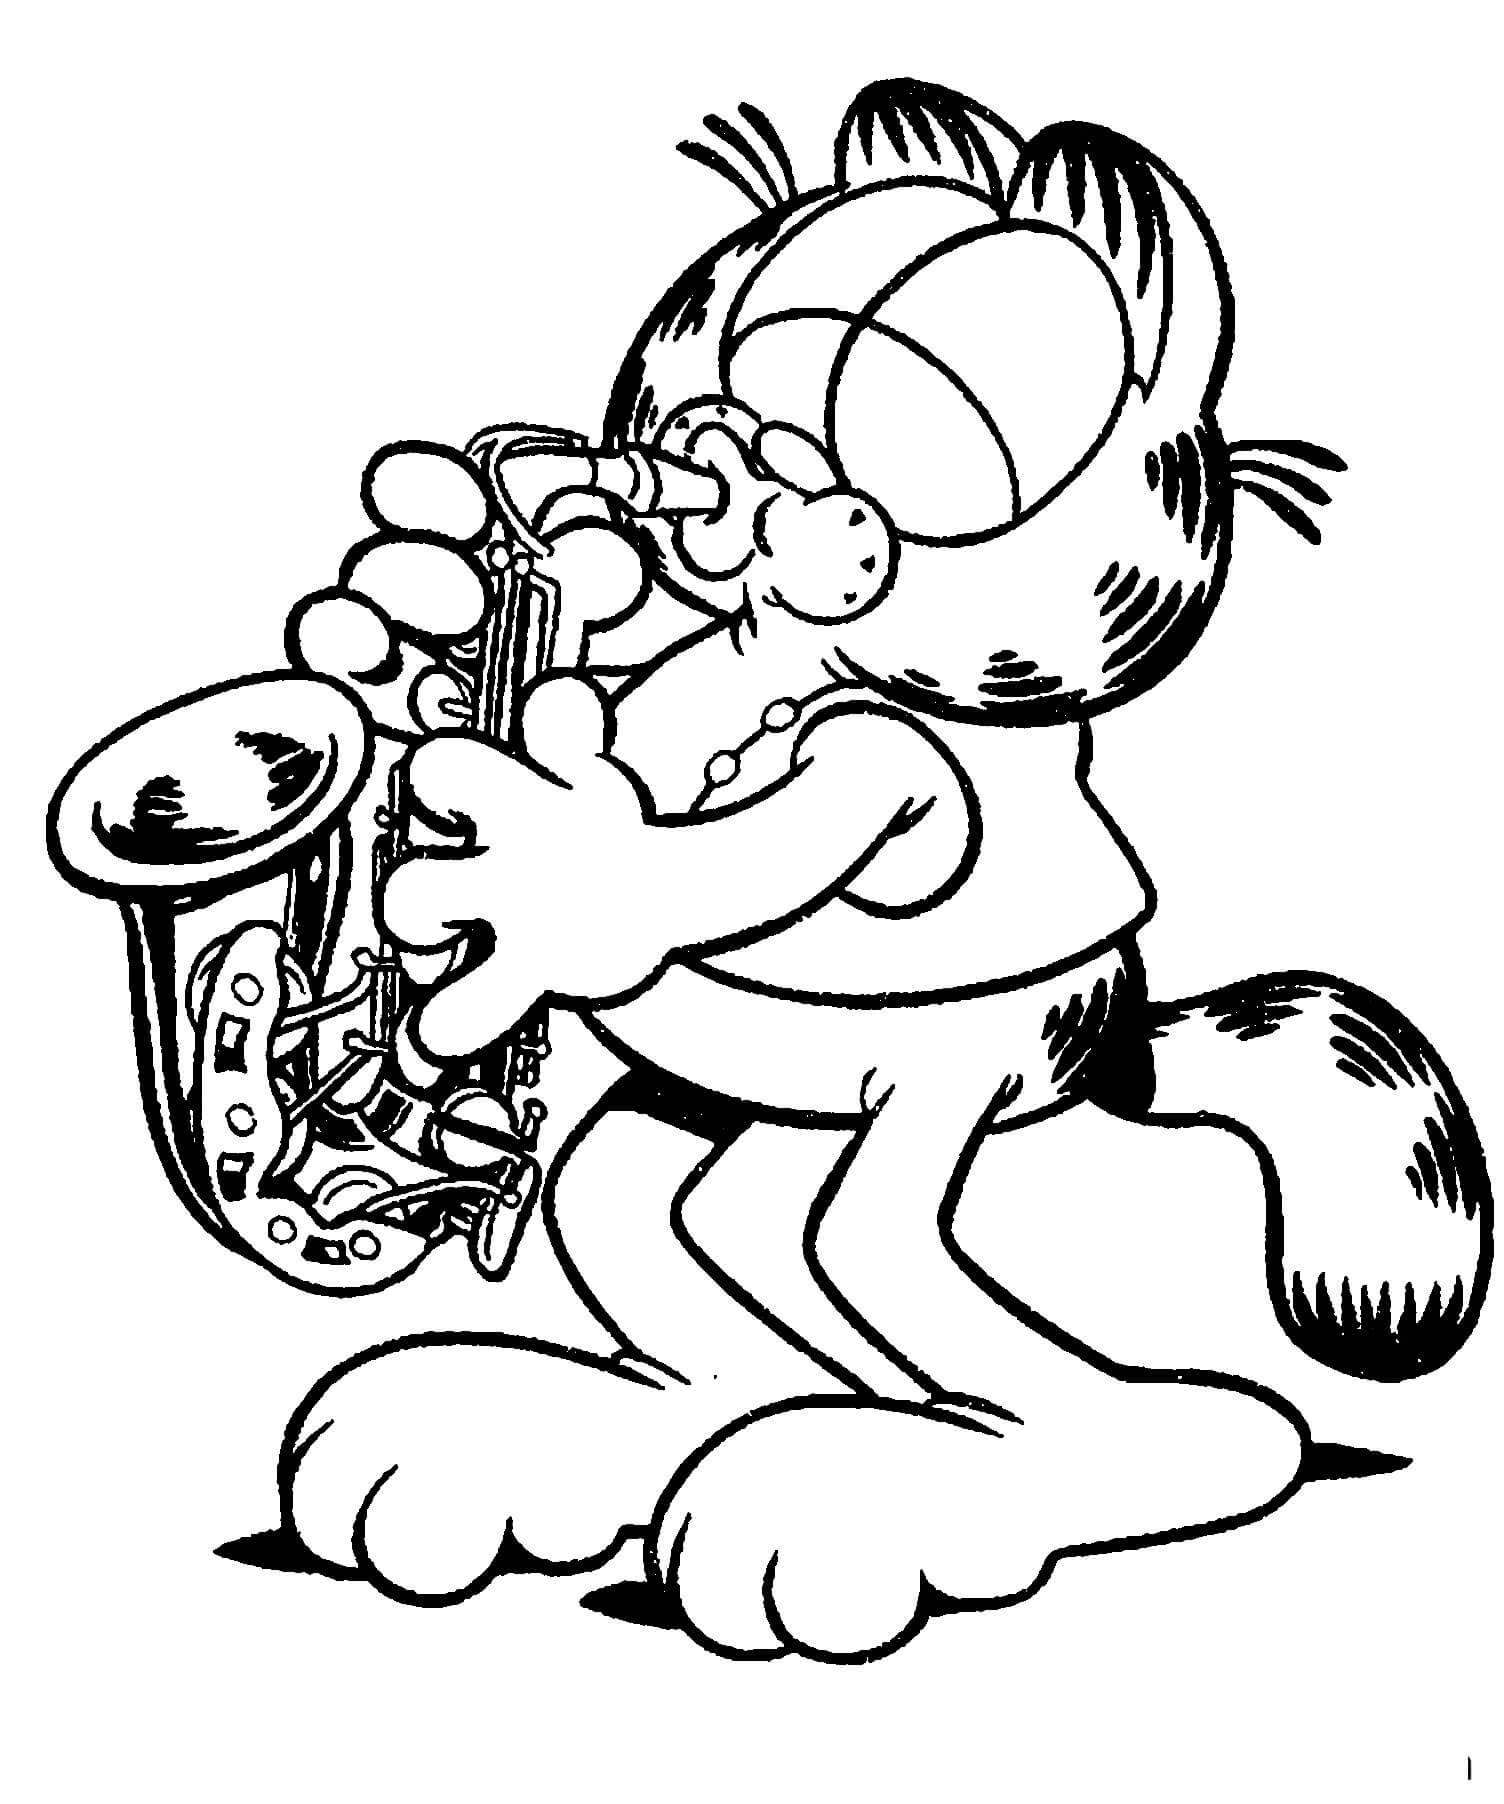 Garfield Joue du Saxophone coloring page